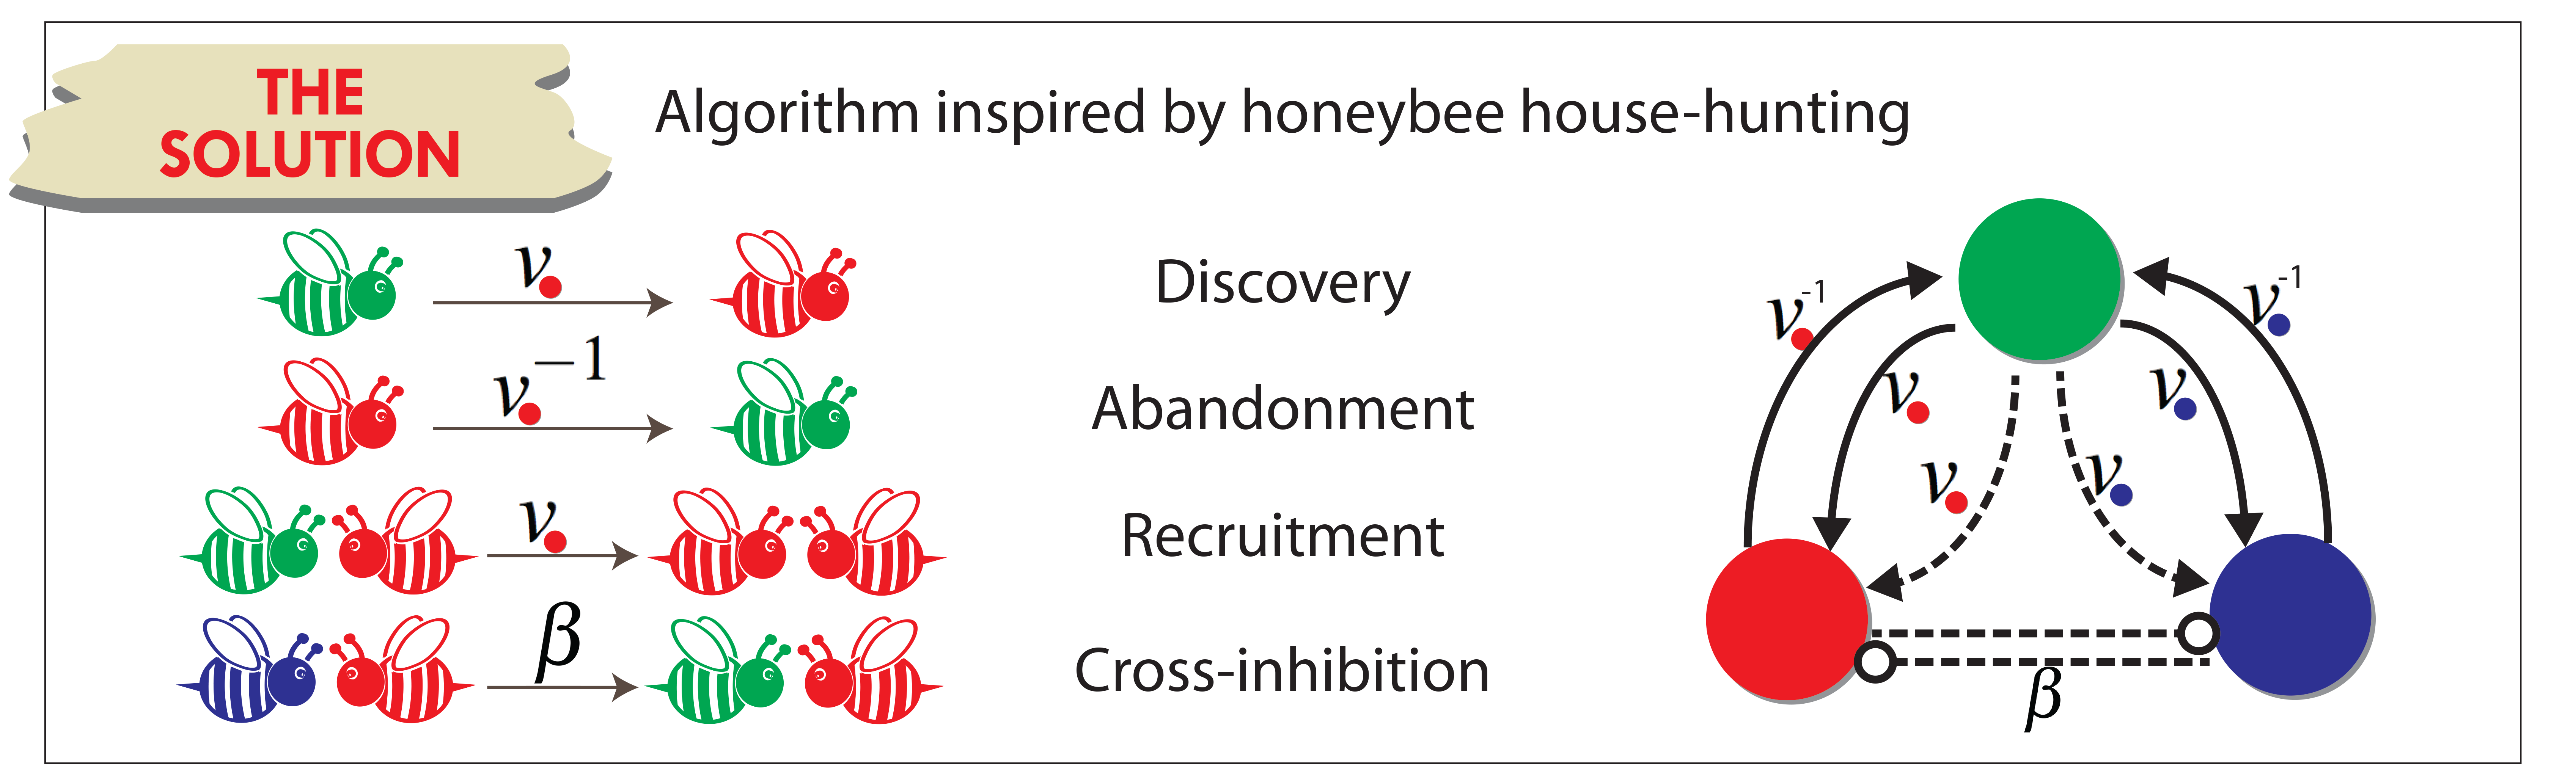 Reina honeybee house-hunting decision 